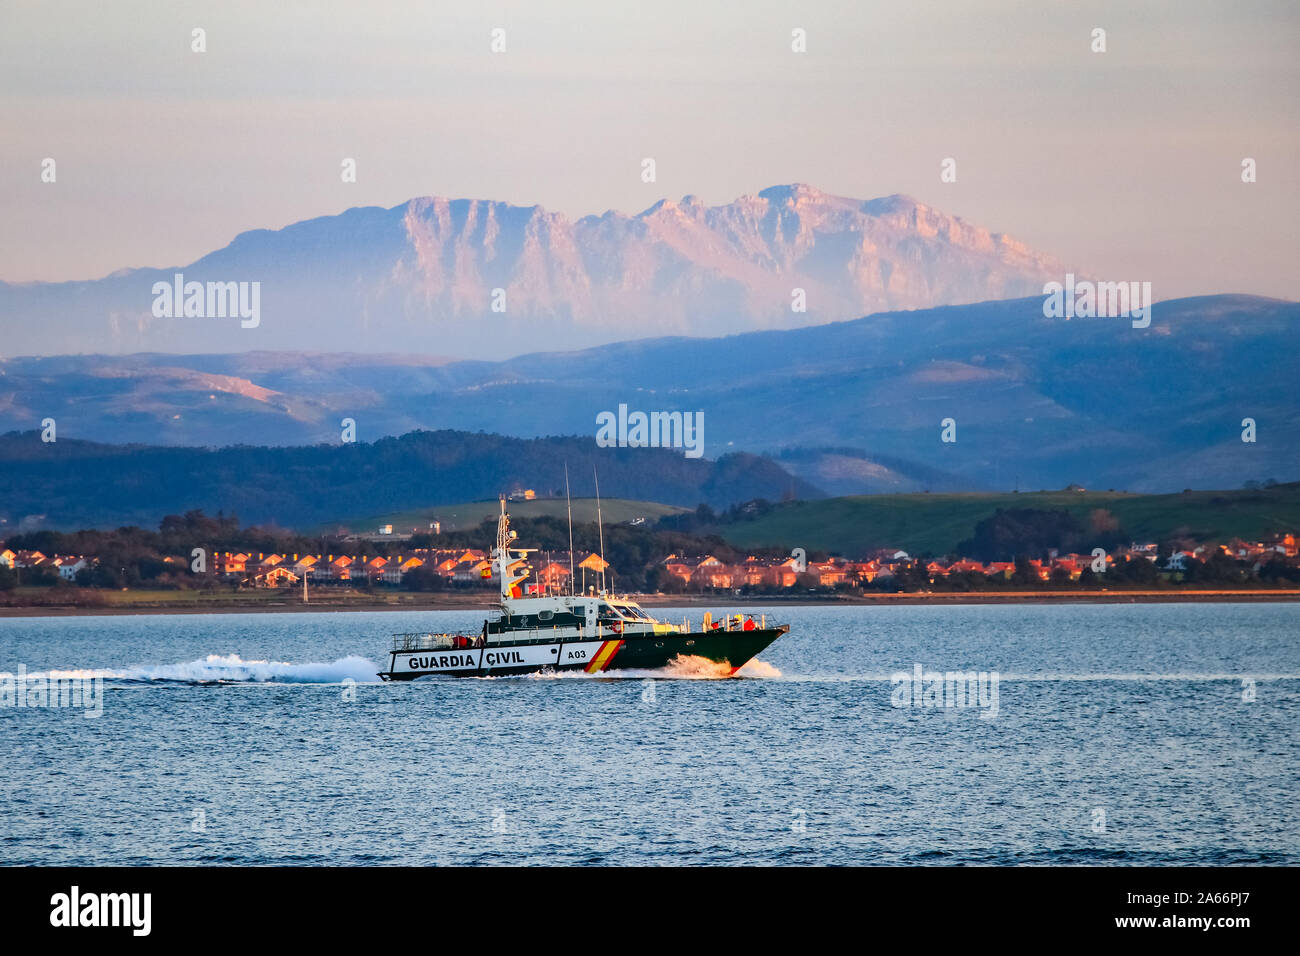 SANTANDER, SPAIN - February 21, 2017: Guardia Civil boat sails at Santander bay Stock Photo